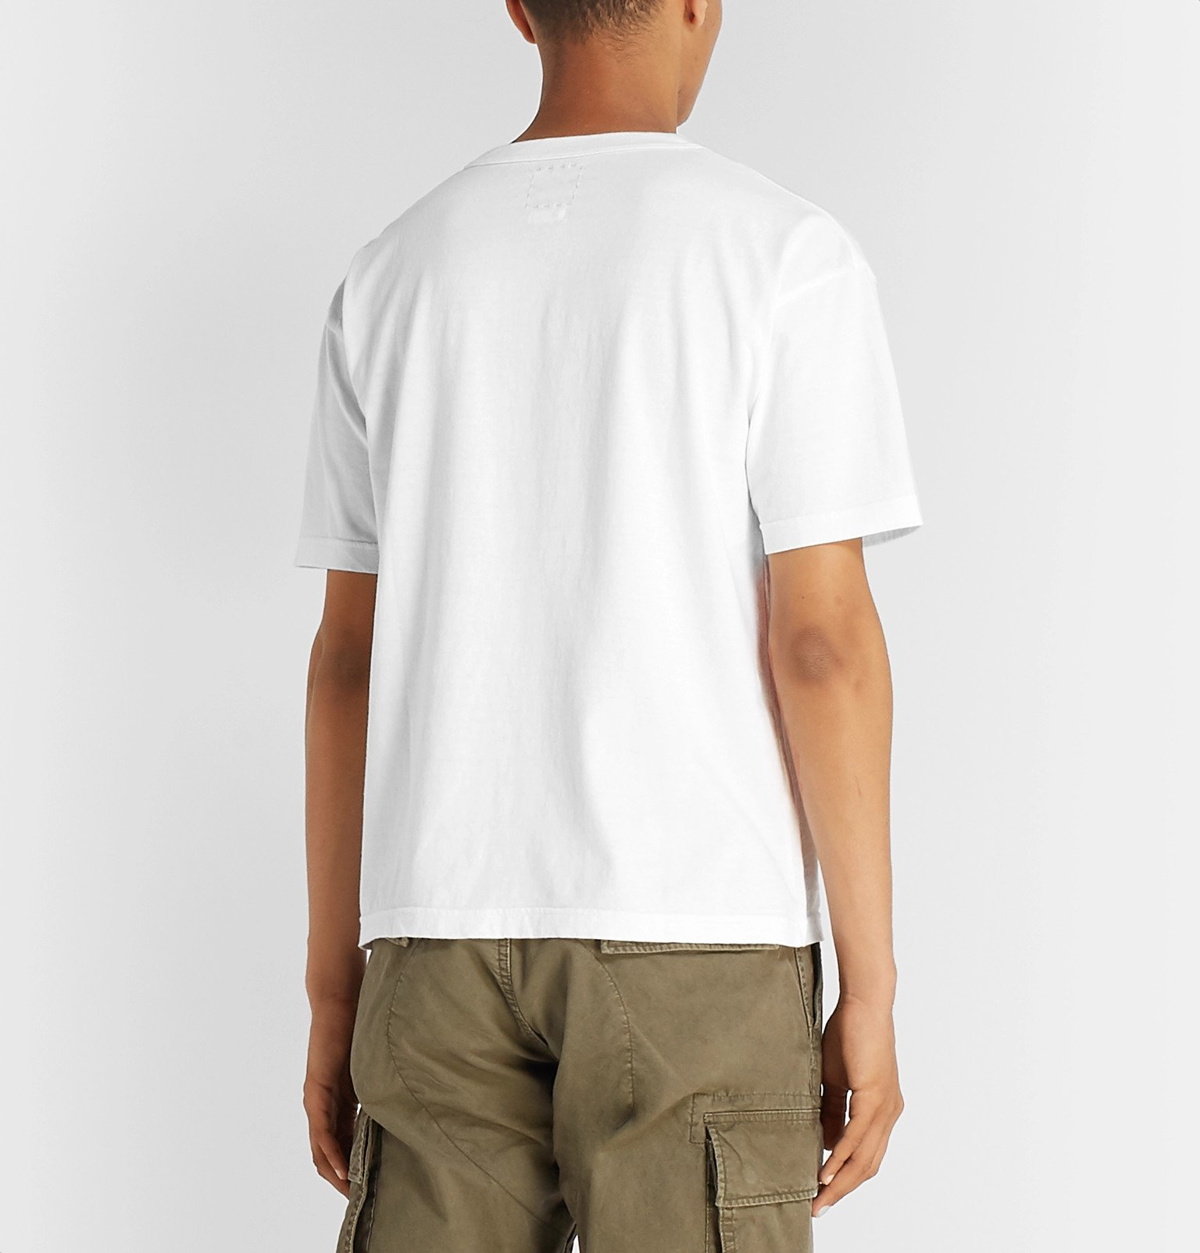 visvim - Printed Cotton-Jersey T-Shirt - White